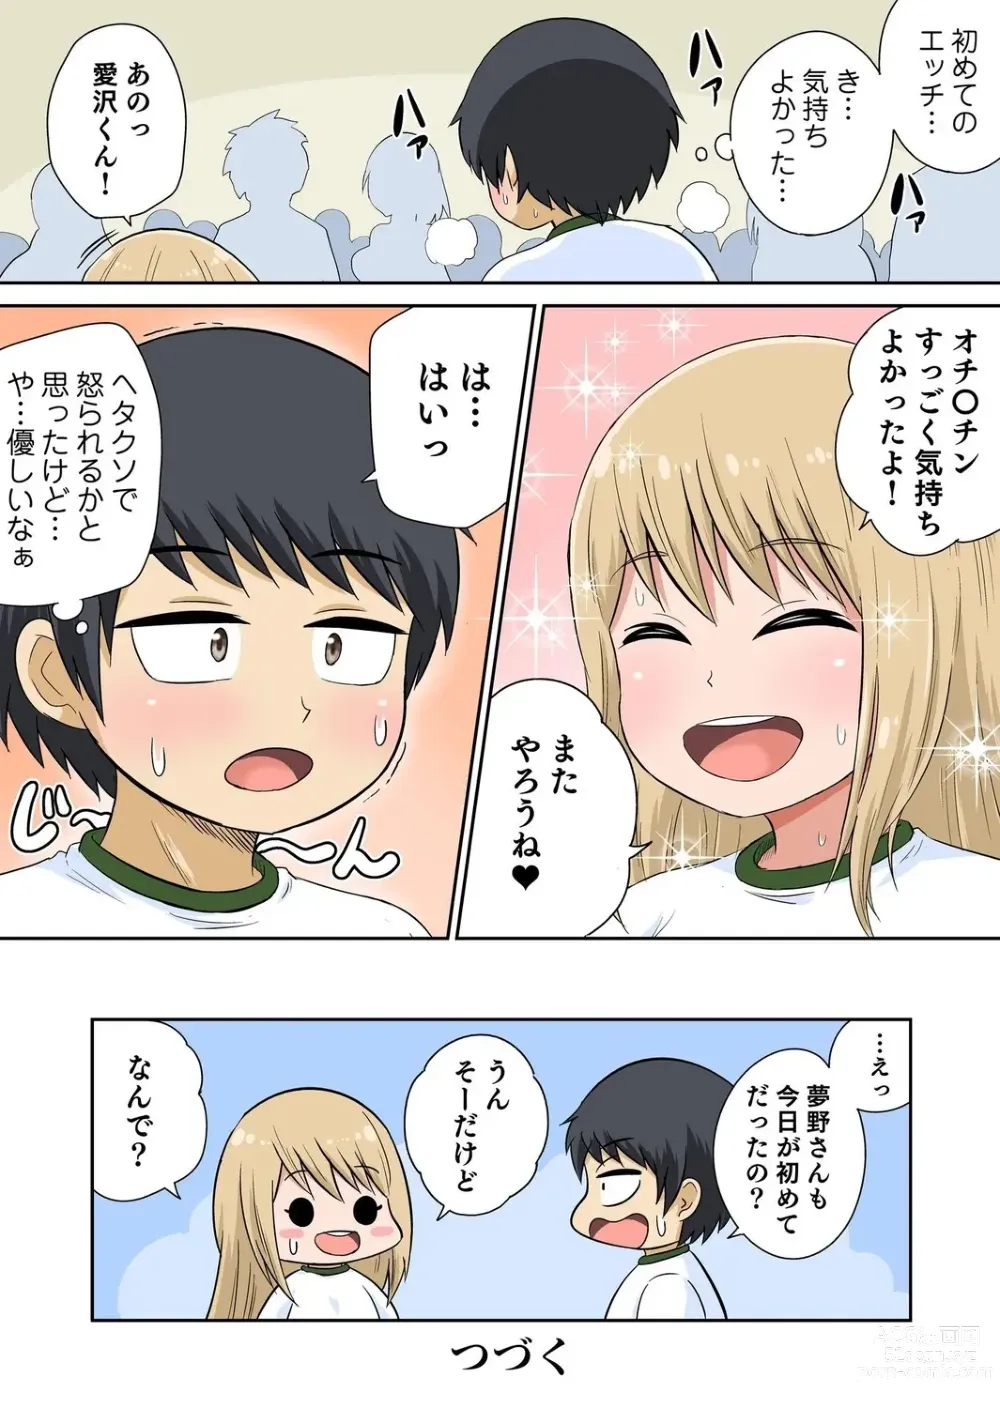 Page 79 of manga Classmate to Ecchi Jugyou Season two Chapter1~Chapter4